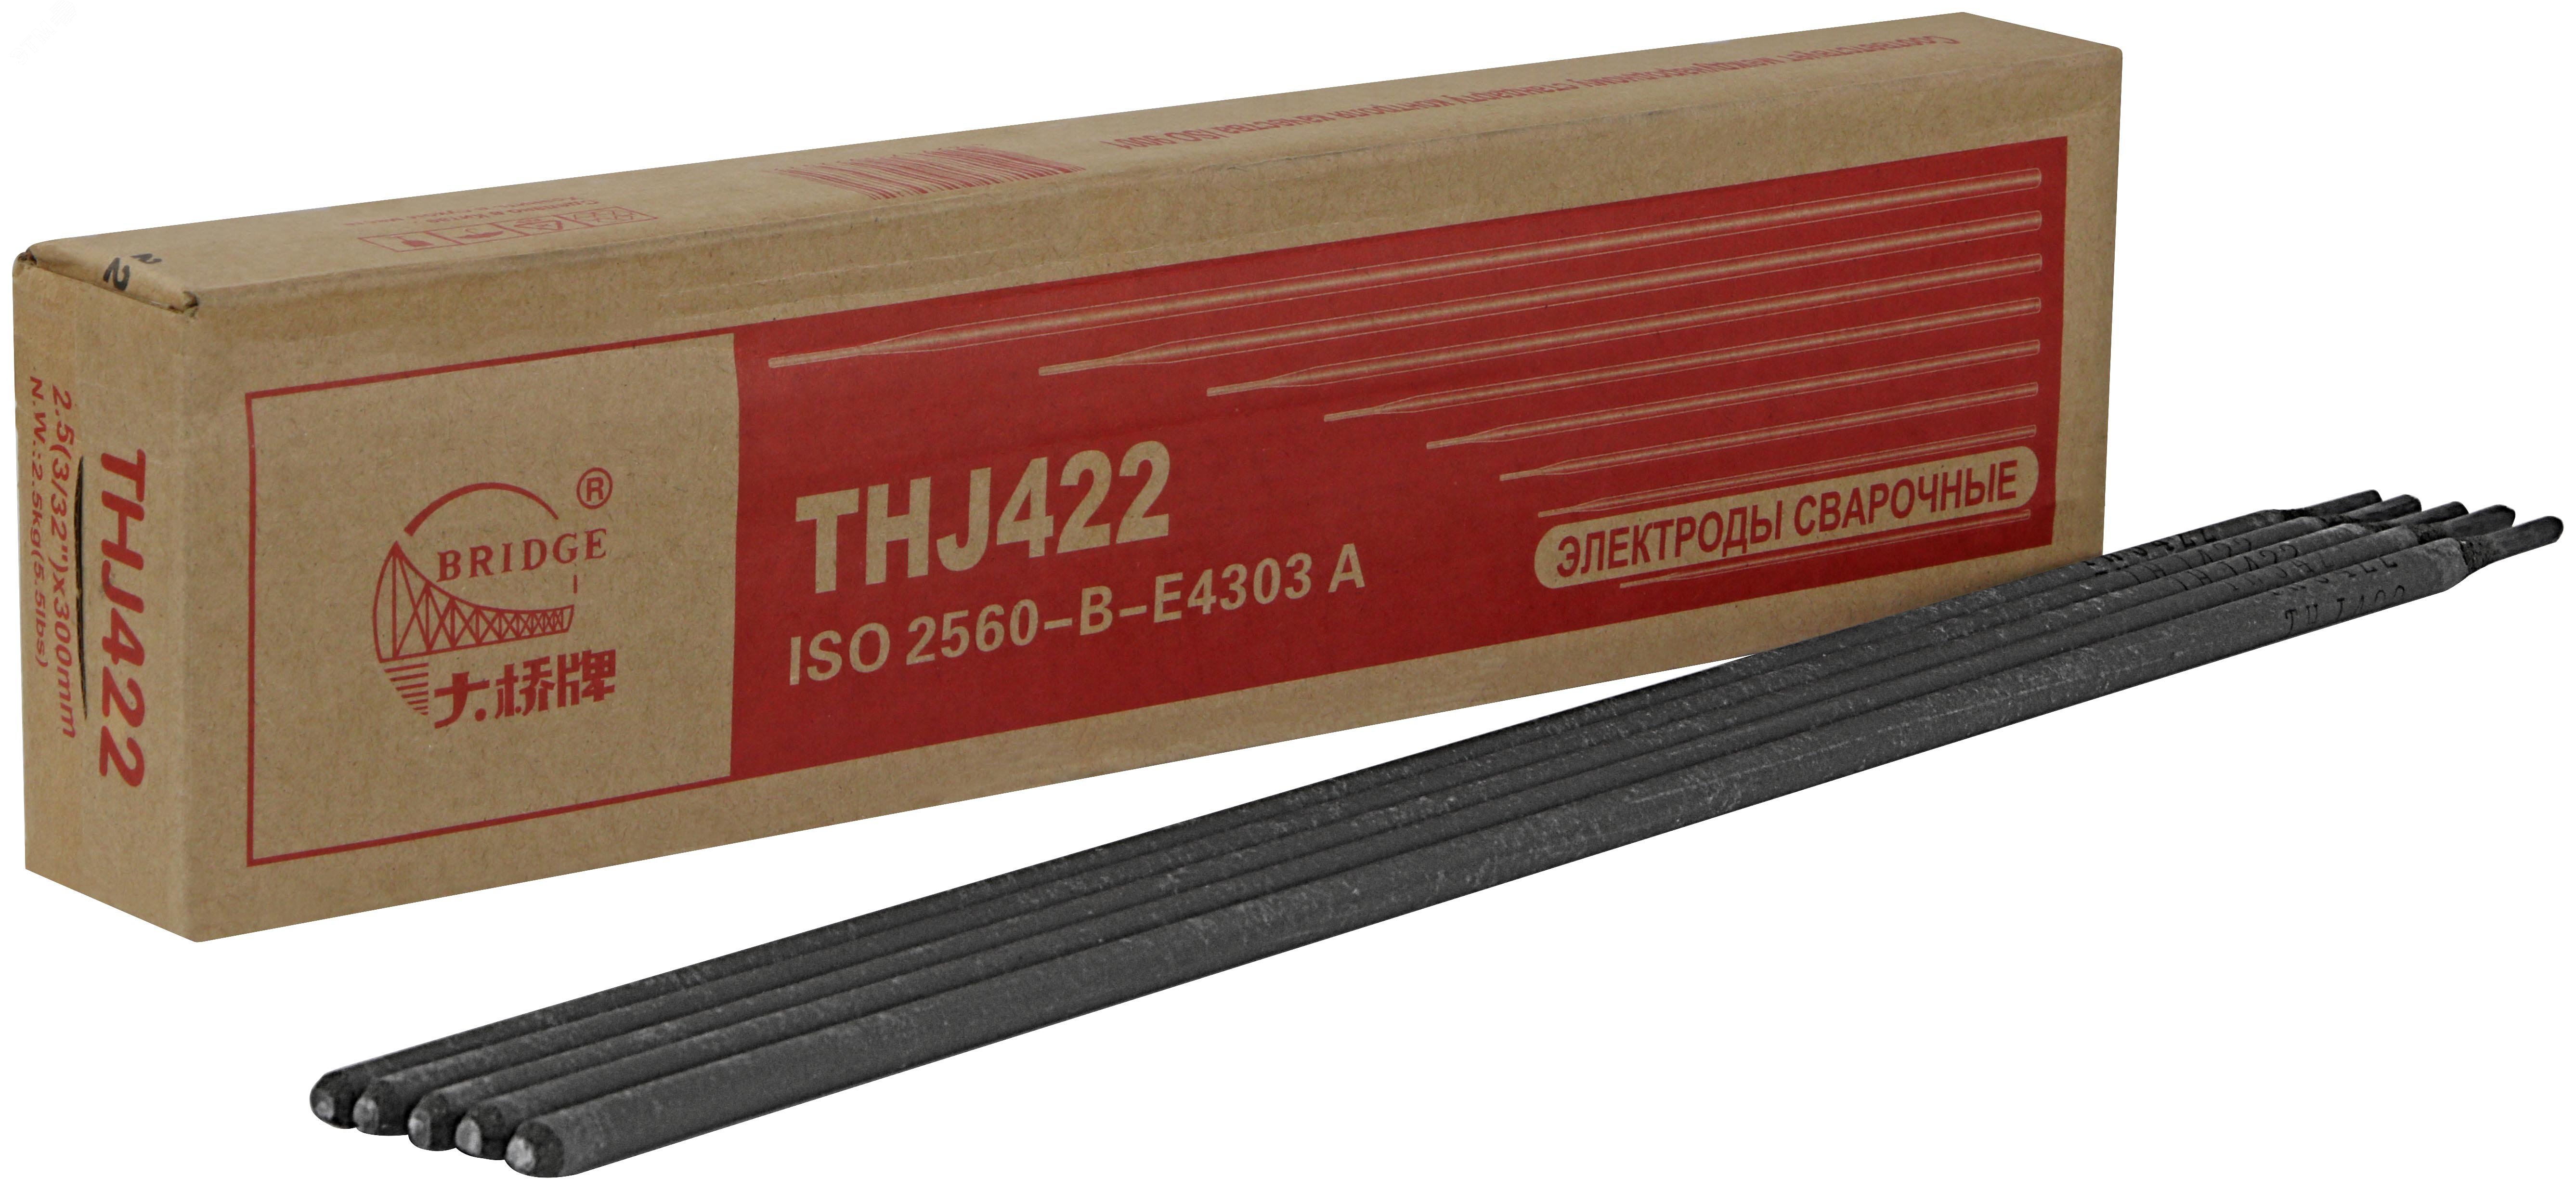 Электроды THJ422 Ф3.2 мм х 350 мм, 5 кг (аналог МР-3) 81790 Bridge